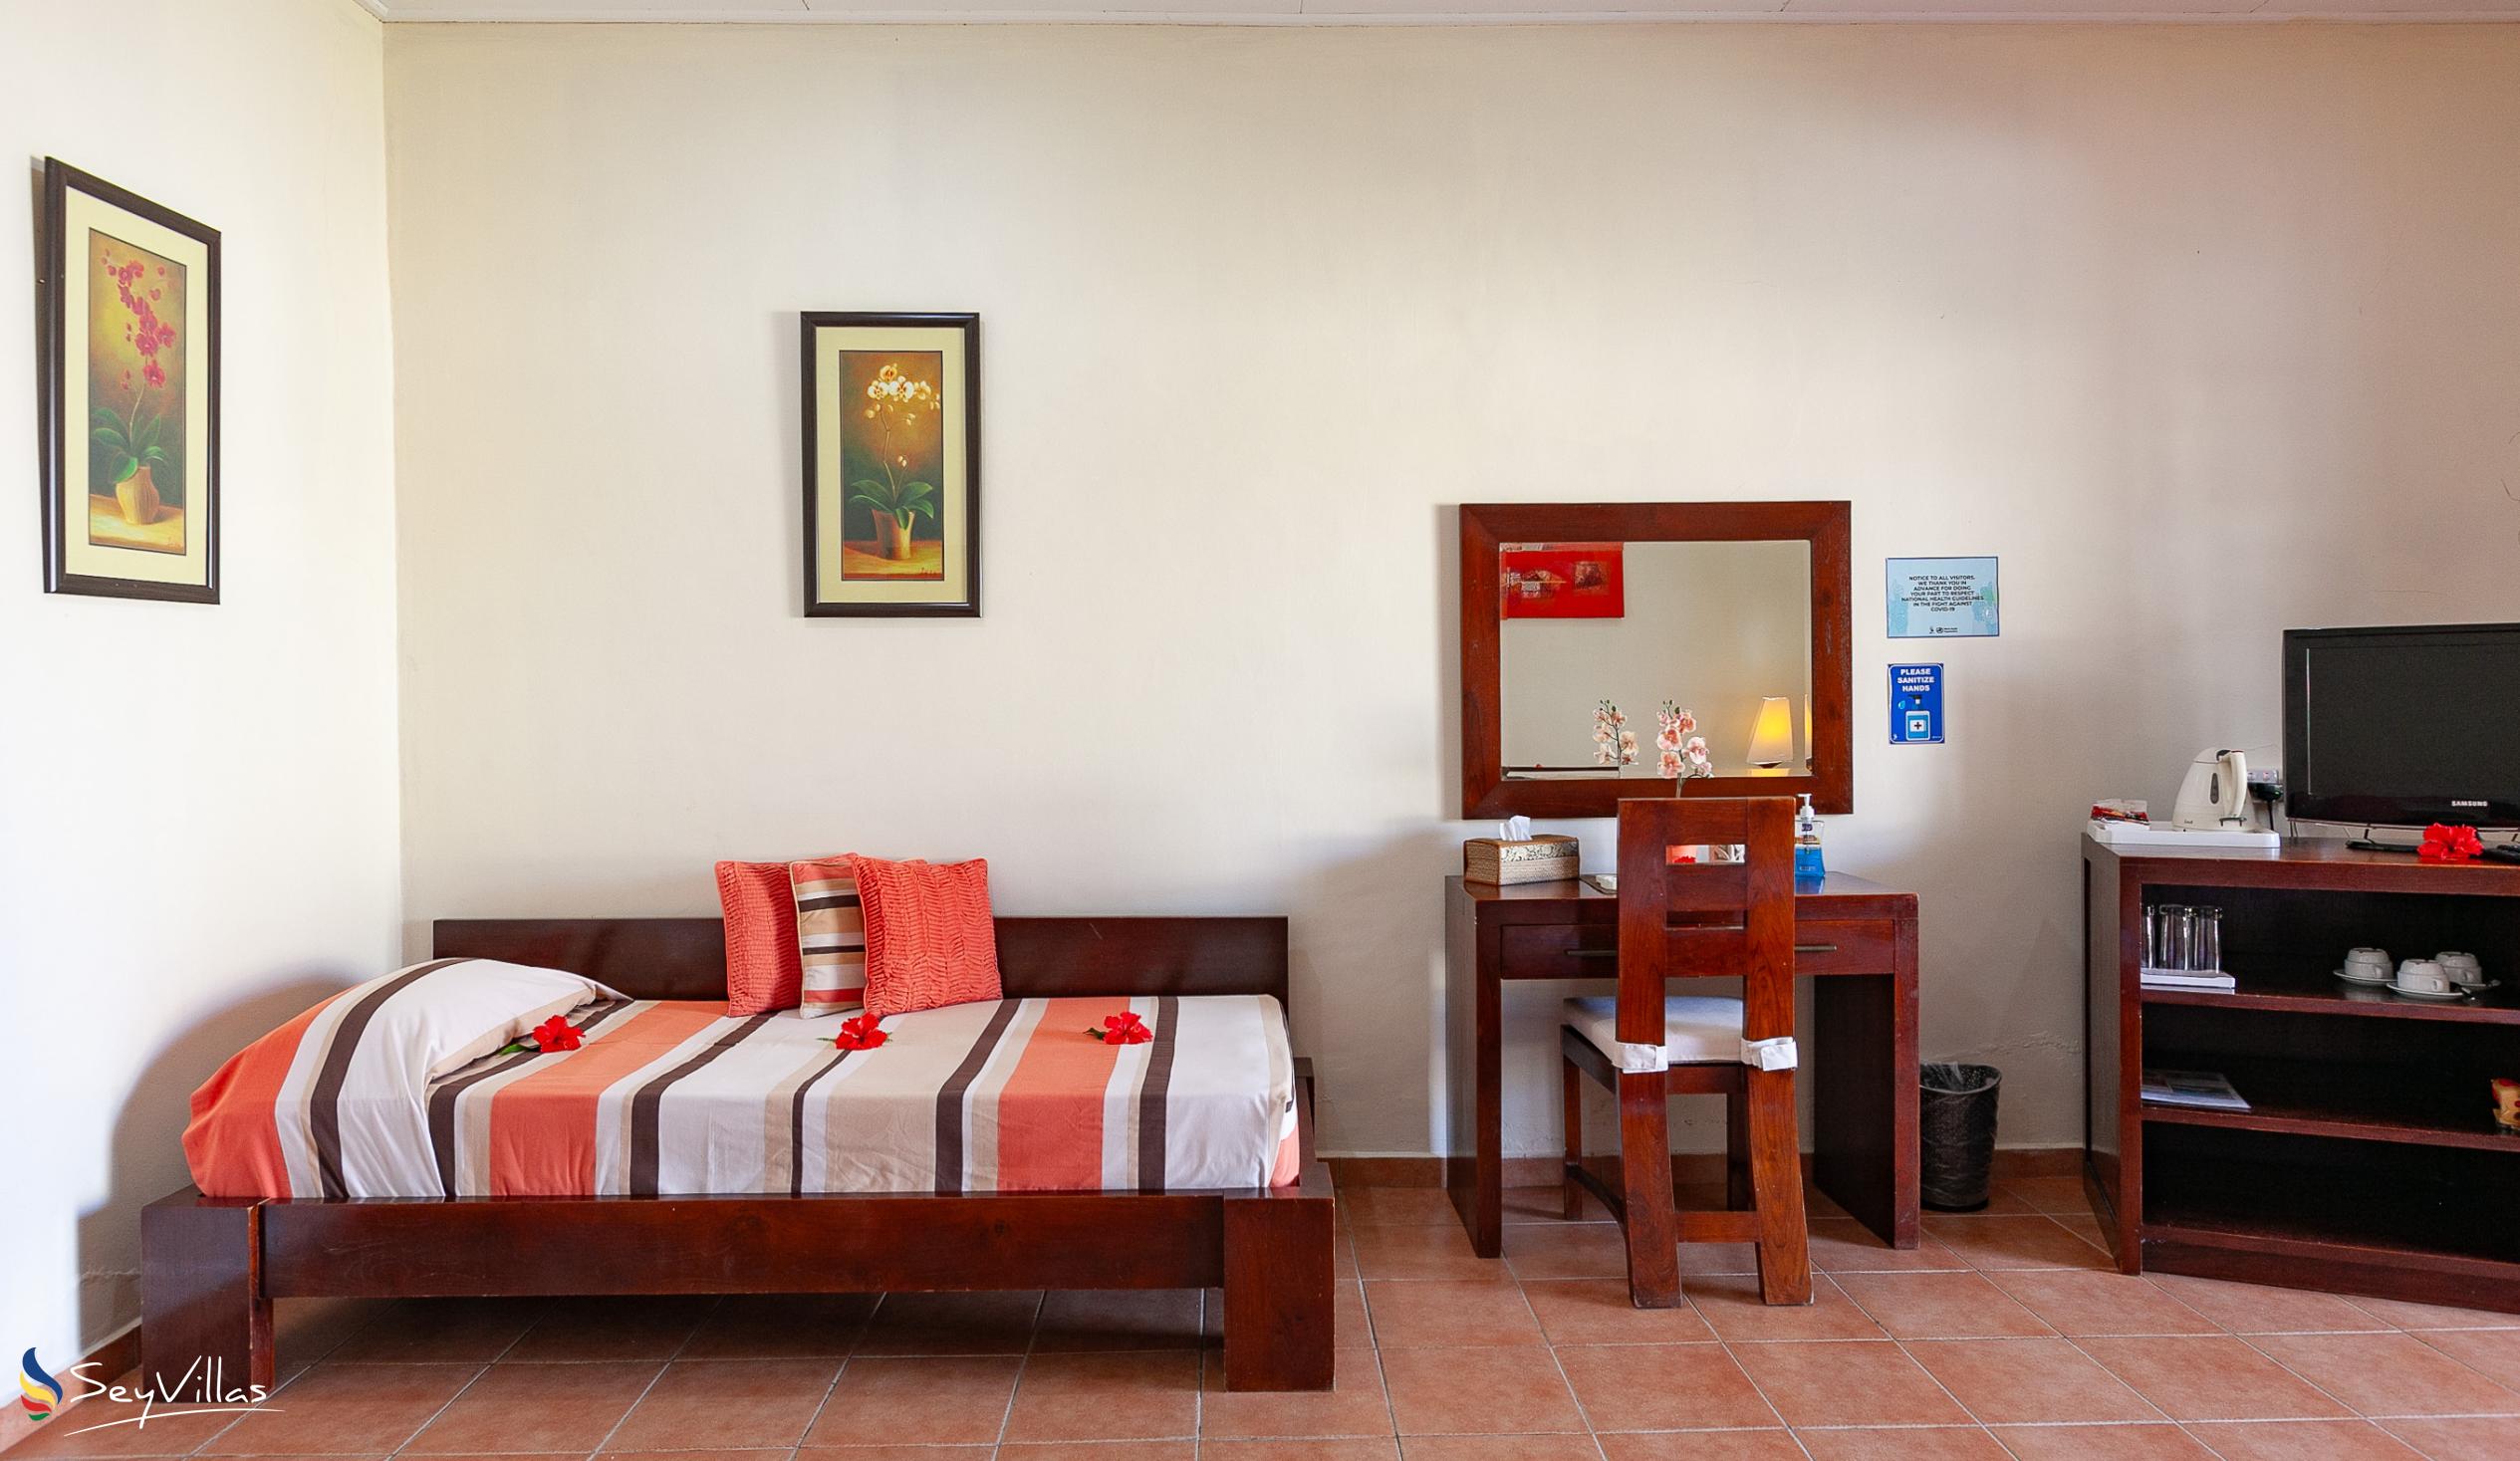 Foto 46: Britannia Hotel - Chambre Familiale Supérieure - Praslin (Seychelles)